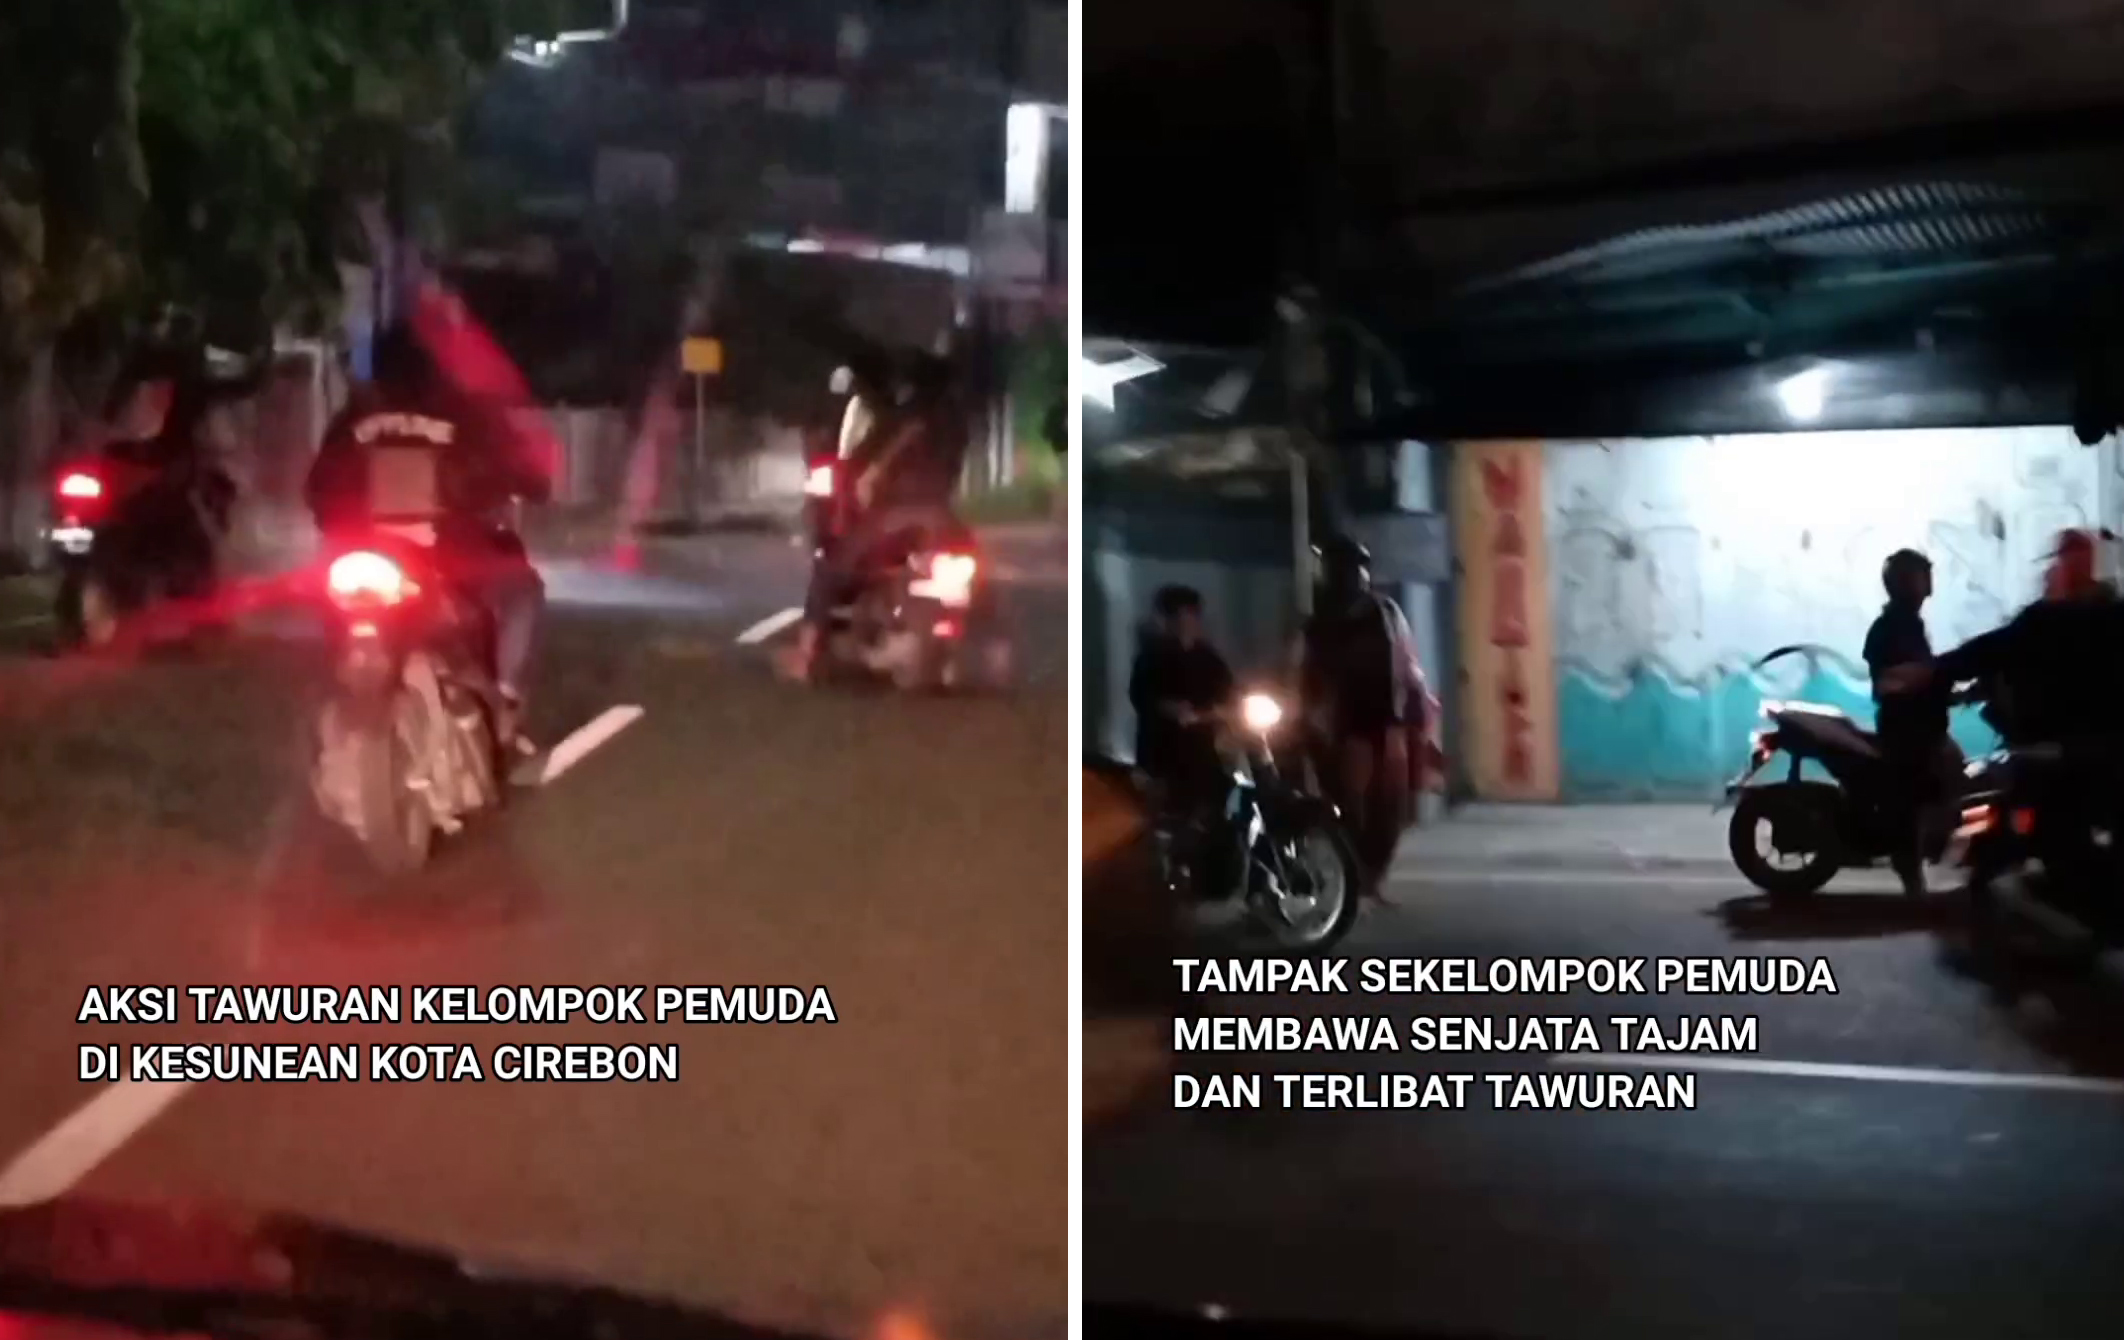 Cirebon Oh Cirebon, Kembali Sekelompok Pemuda Diduga Tawuran di Kesunean